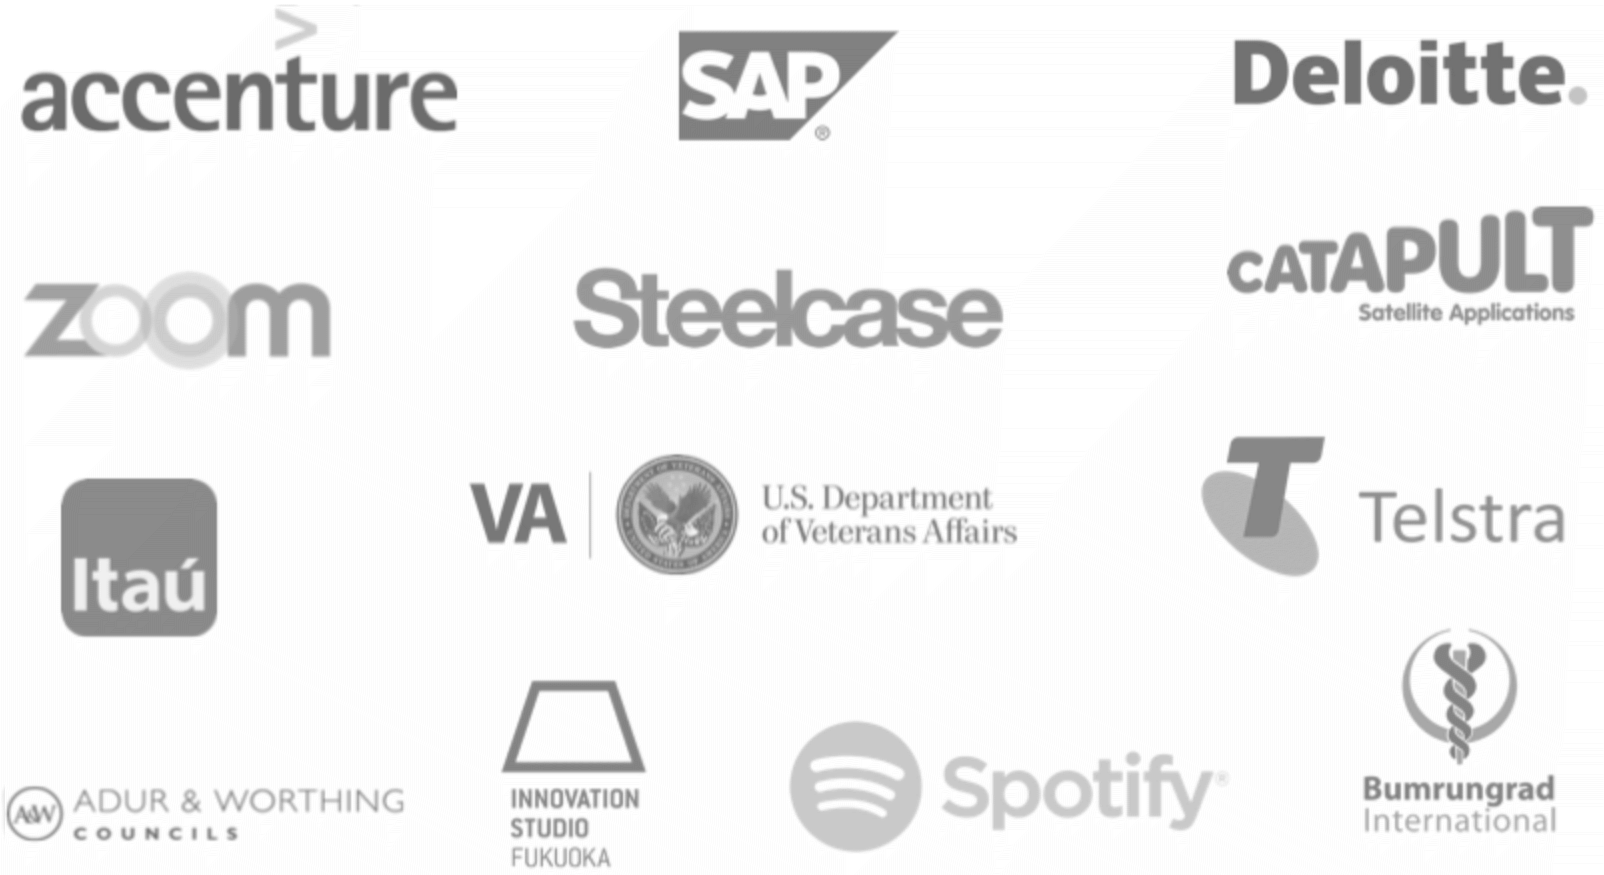 List of companies Emma has interviewed - Accenture, SAP, Deloitte, Zoom, Steelcase, Catapult, Itau, US Dept of Veteran Affairs, Tesltra, Adur and Worthing Councils, Innovation Studio Fukuoka, Spotify, Bumrumgrad Interational